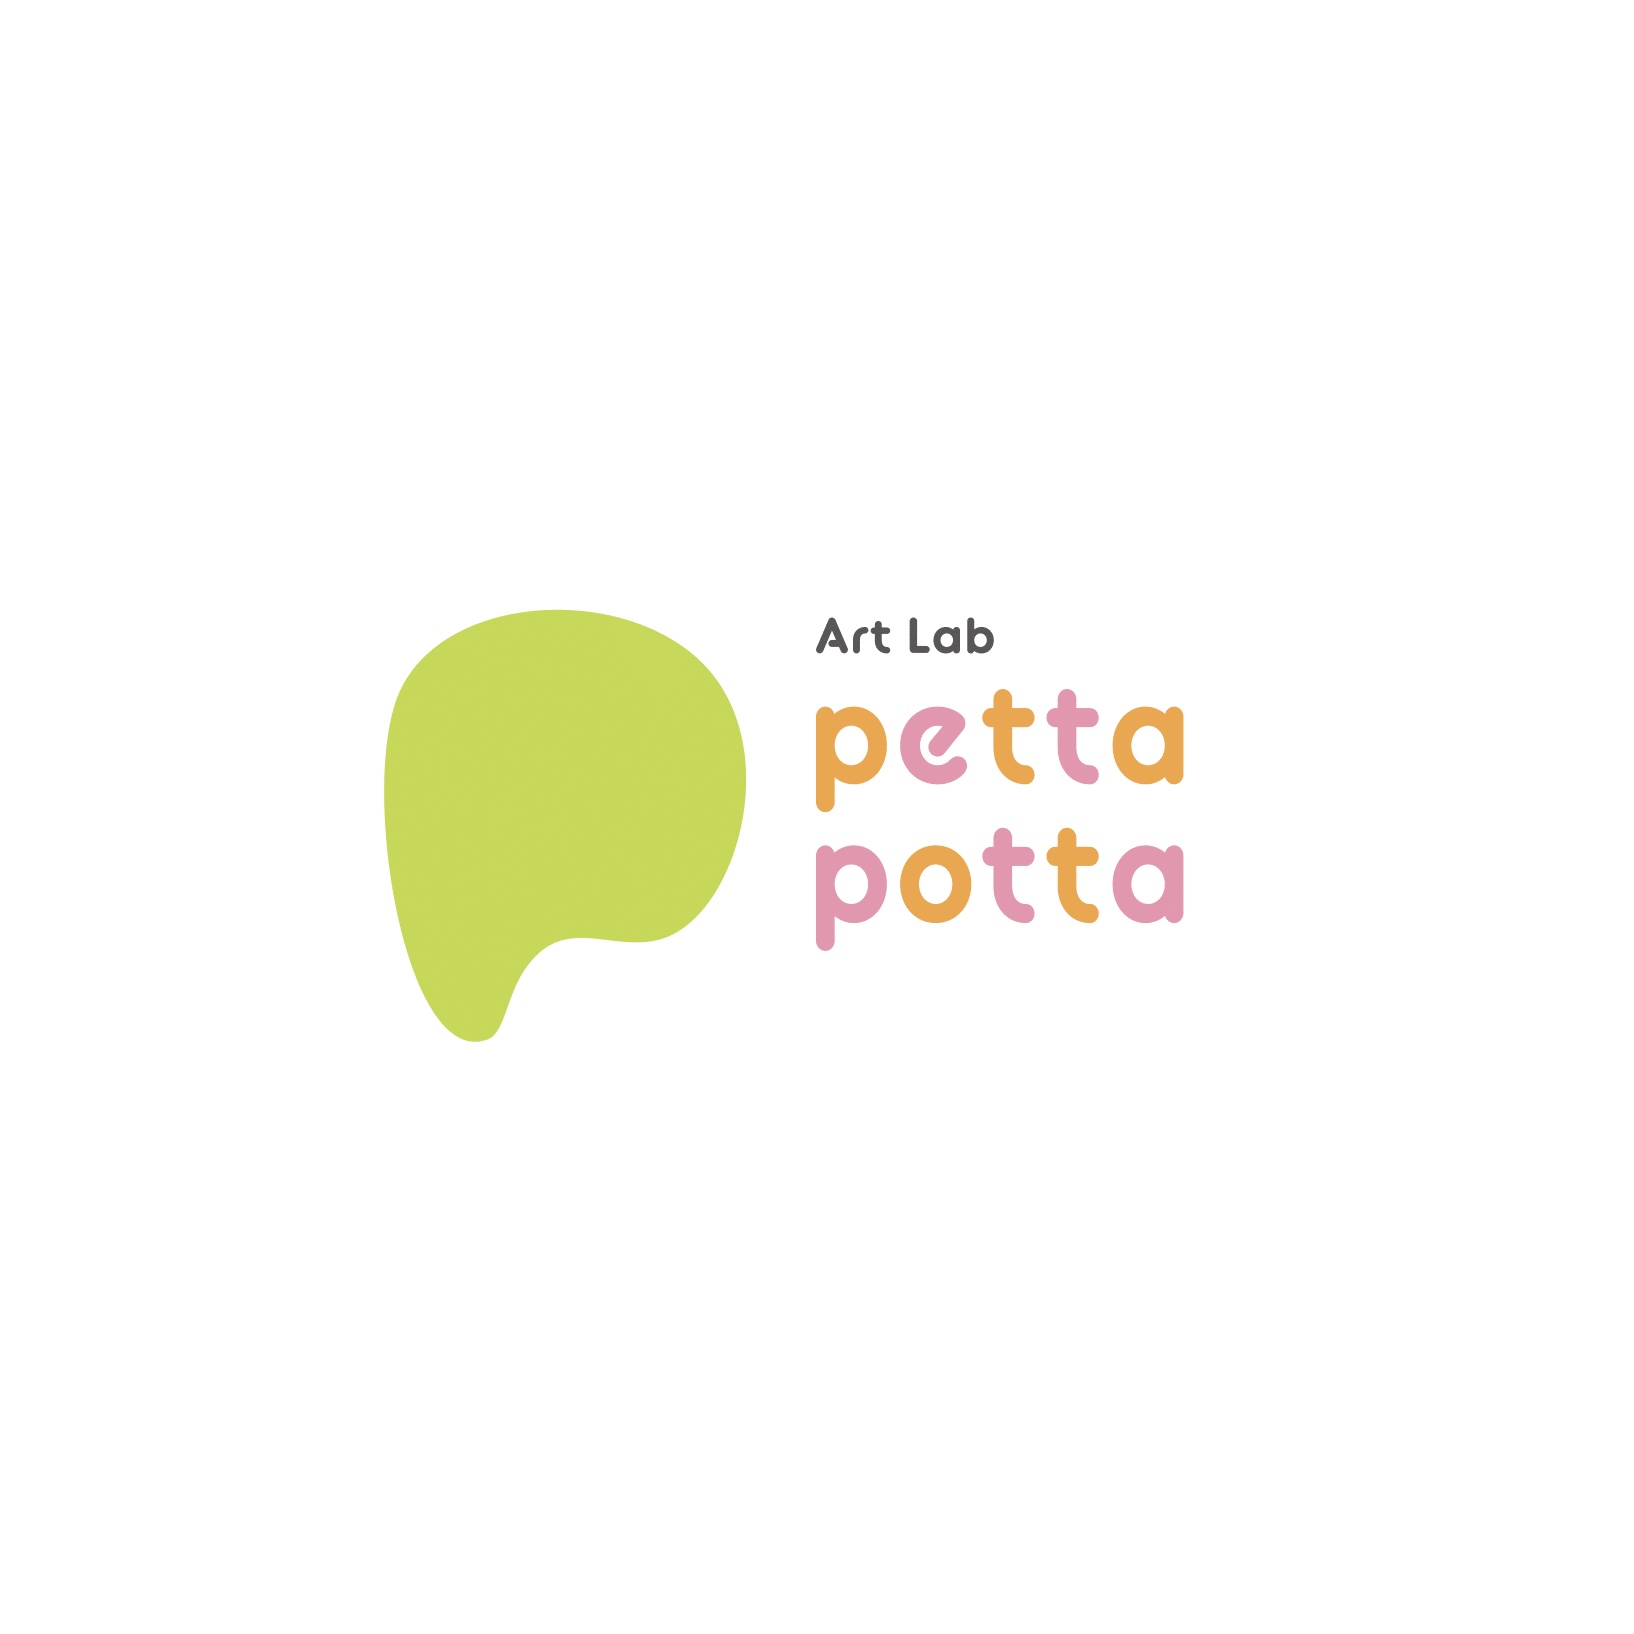 Art Lab petta pottaの雰囲気がわかる写真